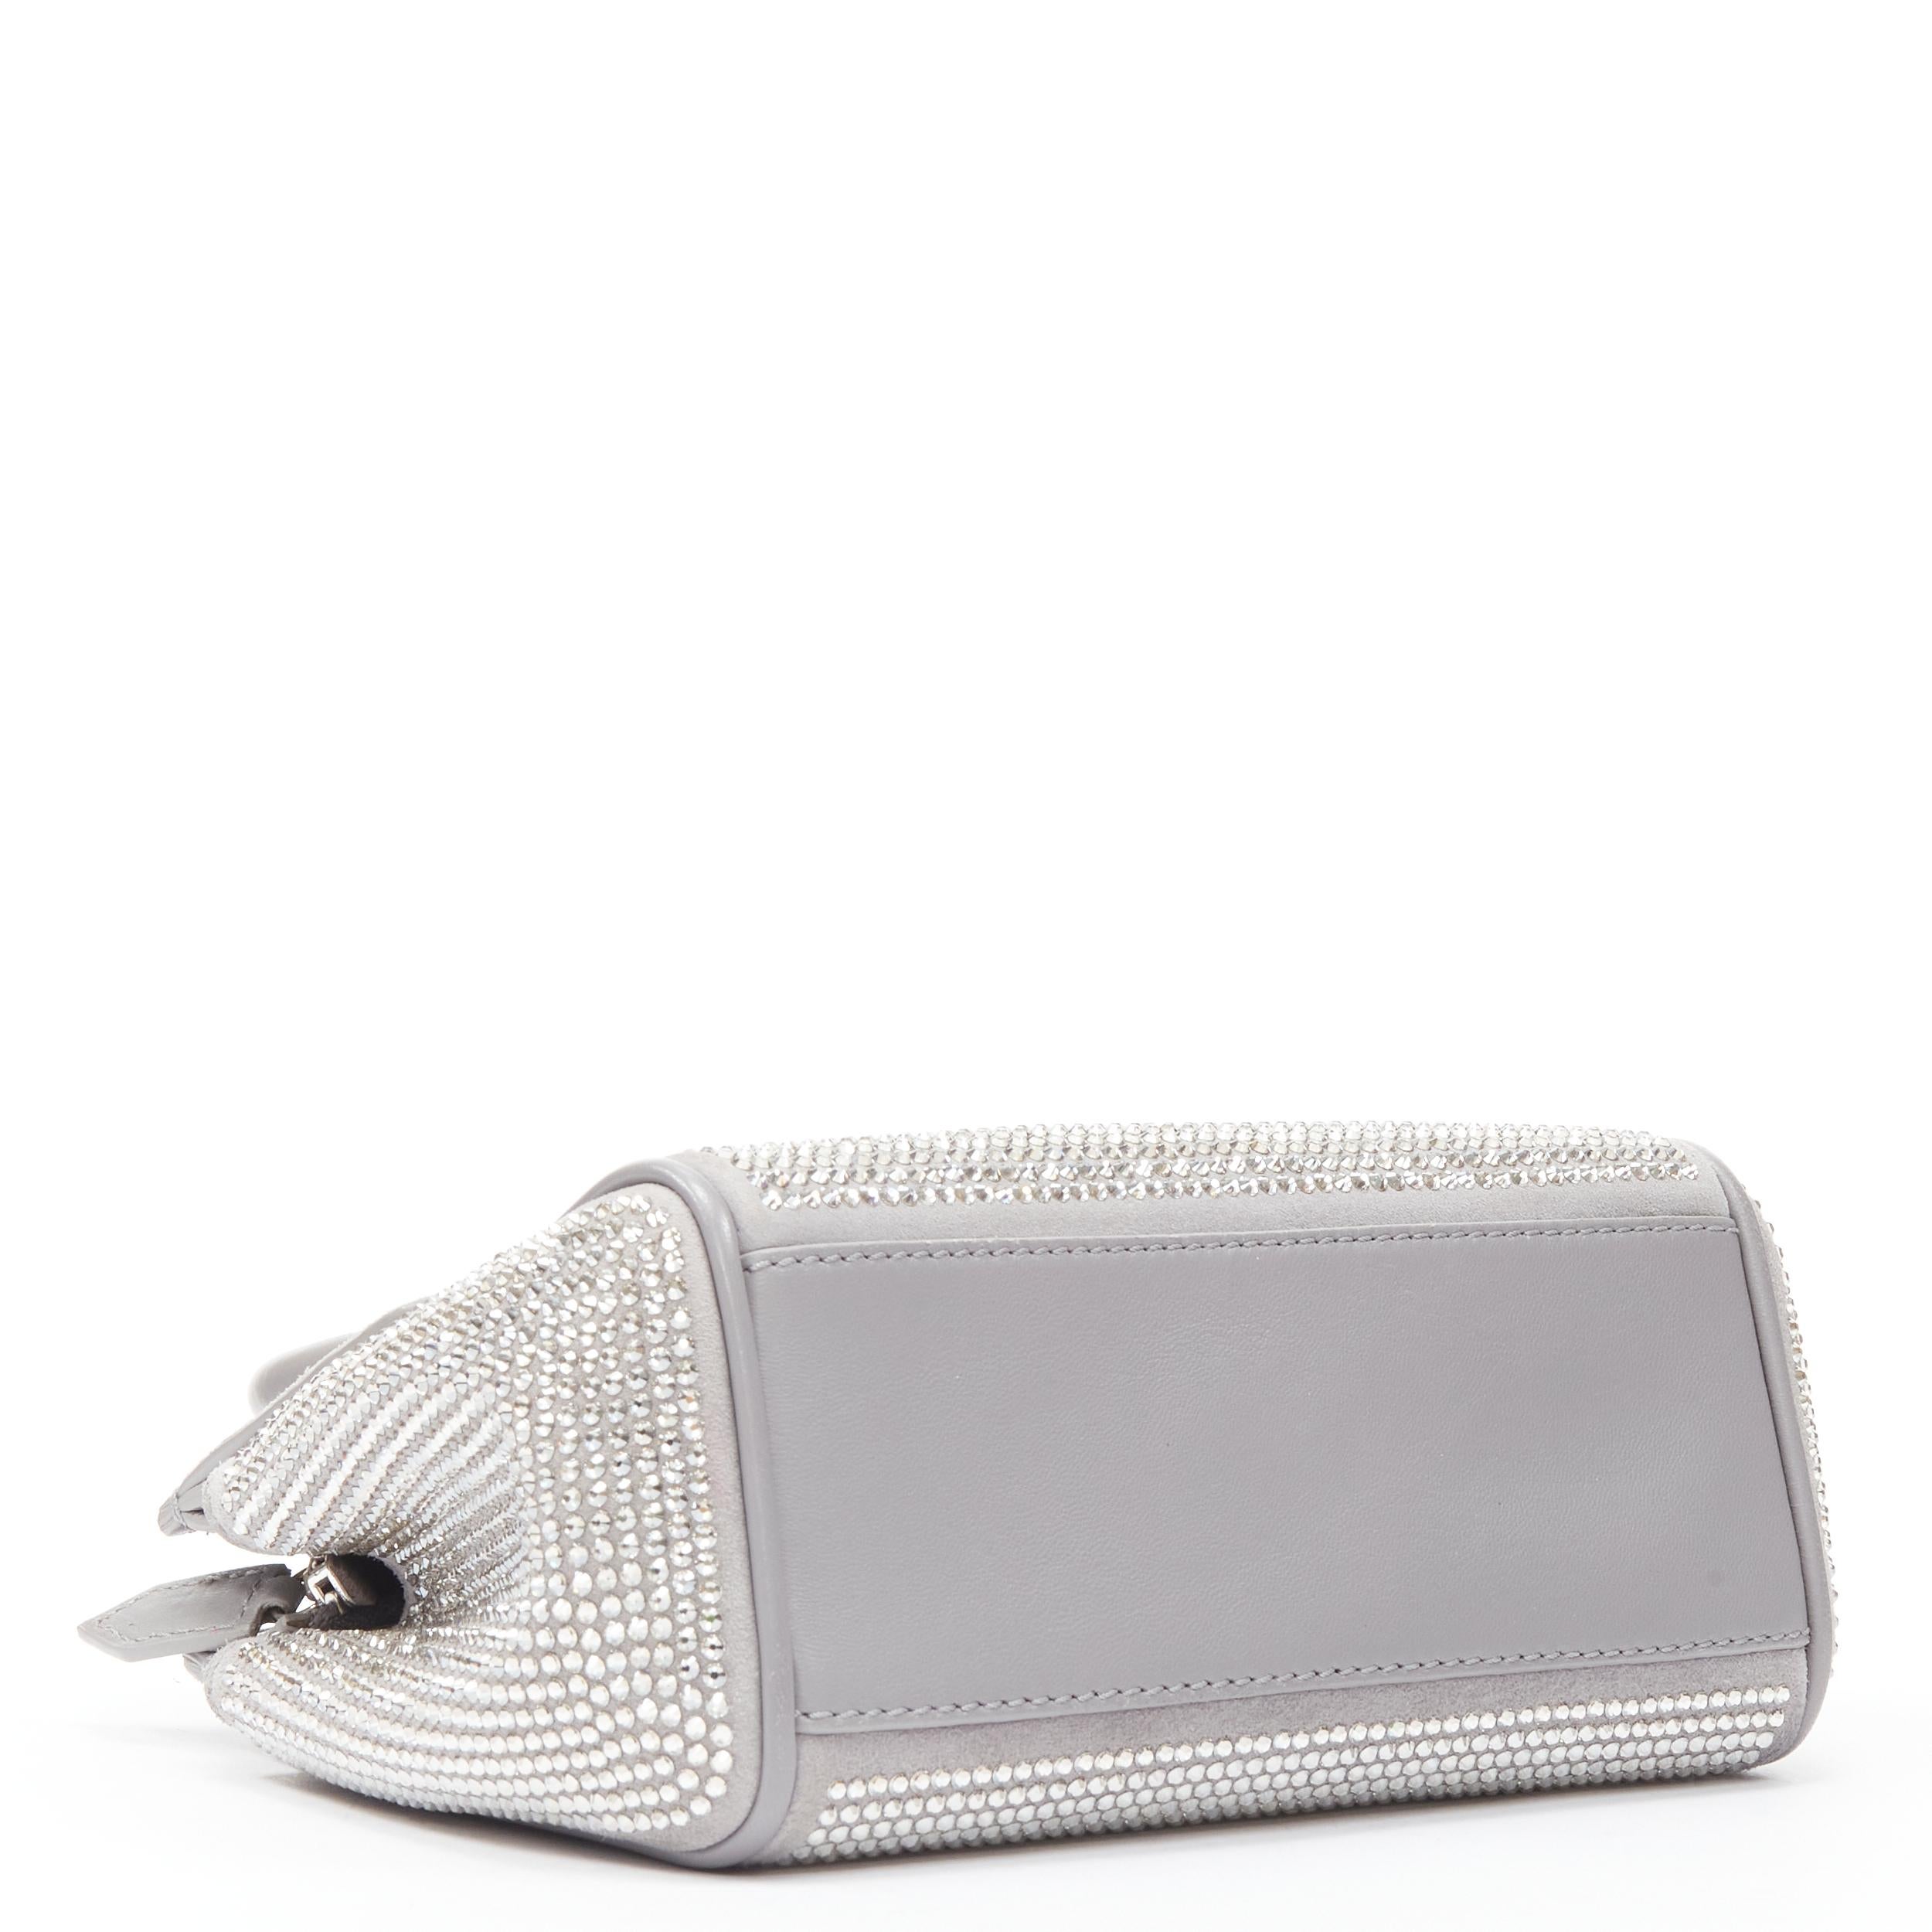 Gray new VERSACE Palazzo Empire Mini Limited Edition grey crystal crossbody bag